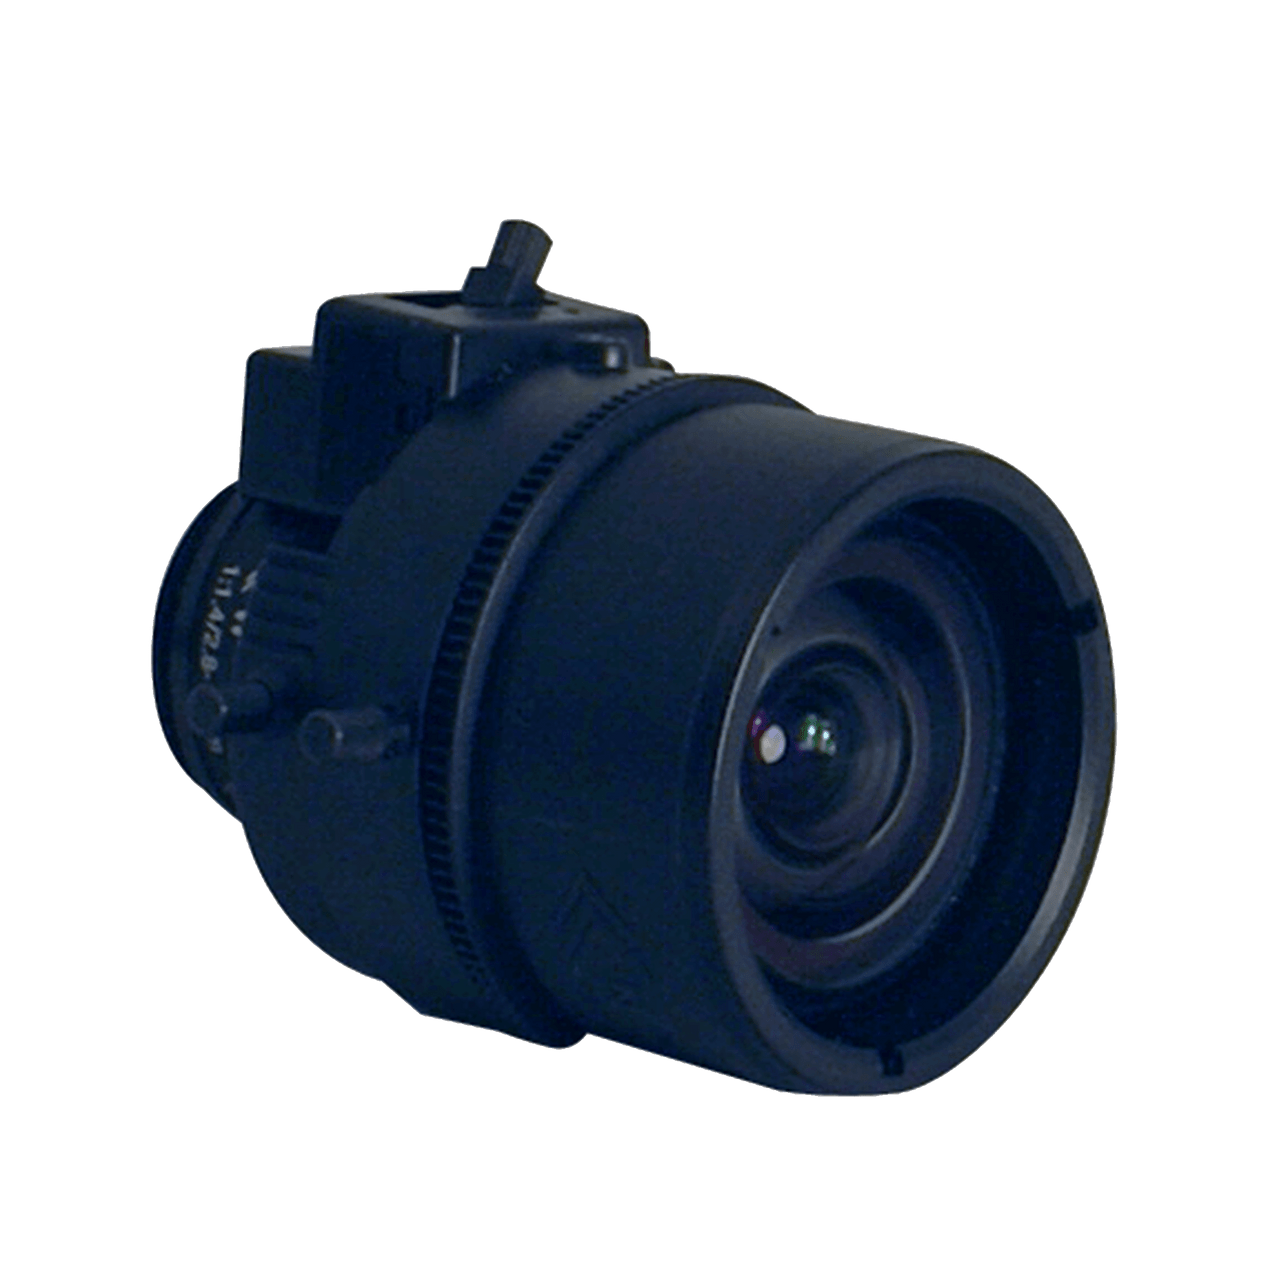 Speco Technologies SPE-VFMP2.712DC6 2.7 to 12mm Megapixel Varifocal Auto Iris Lens-6MP (SPE-VFMP2.712DC6)